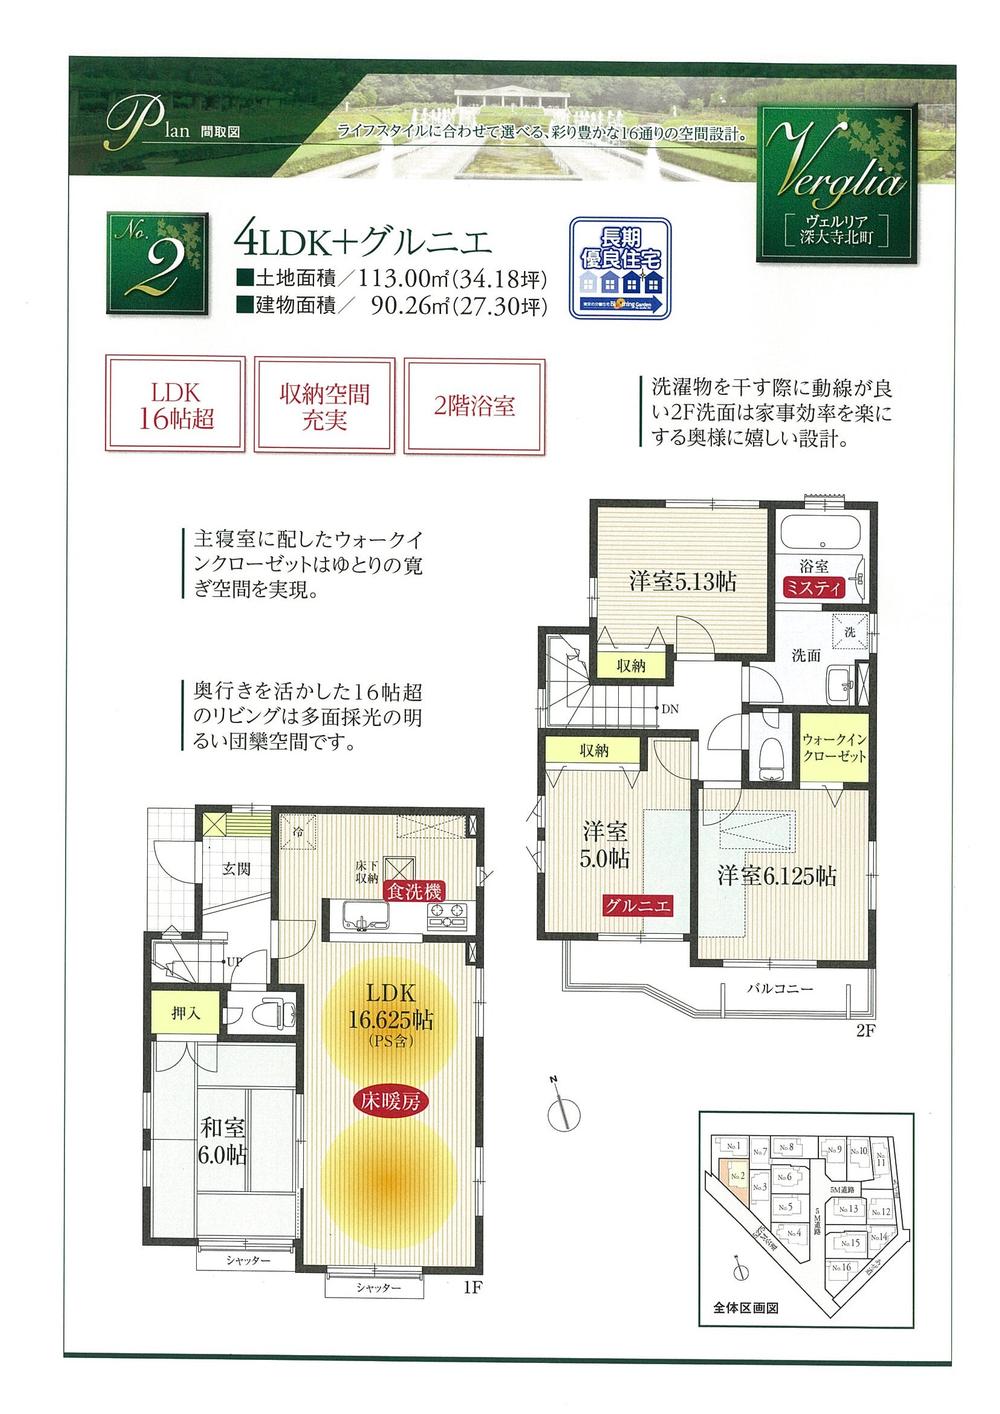 Floor plan. (Building 2), Price 46,800,000 yen, 4LDK, Land area 113 sq m , Building area 90.26 sq m